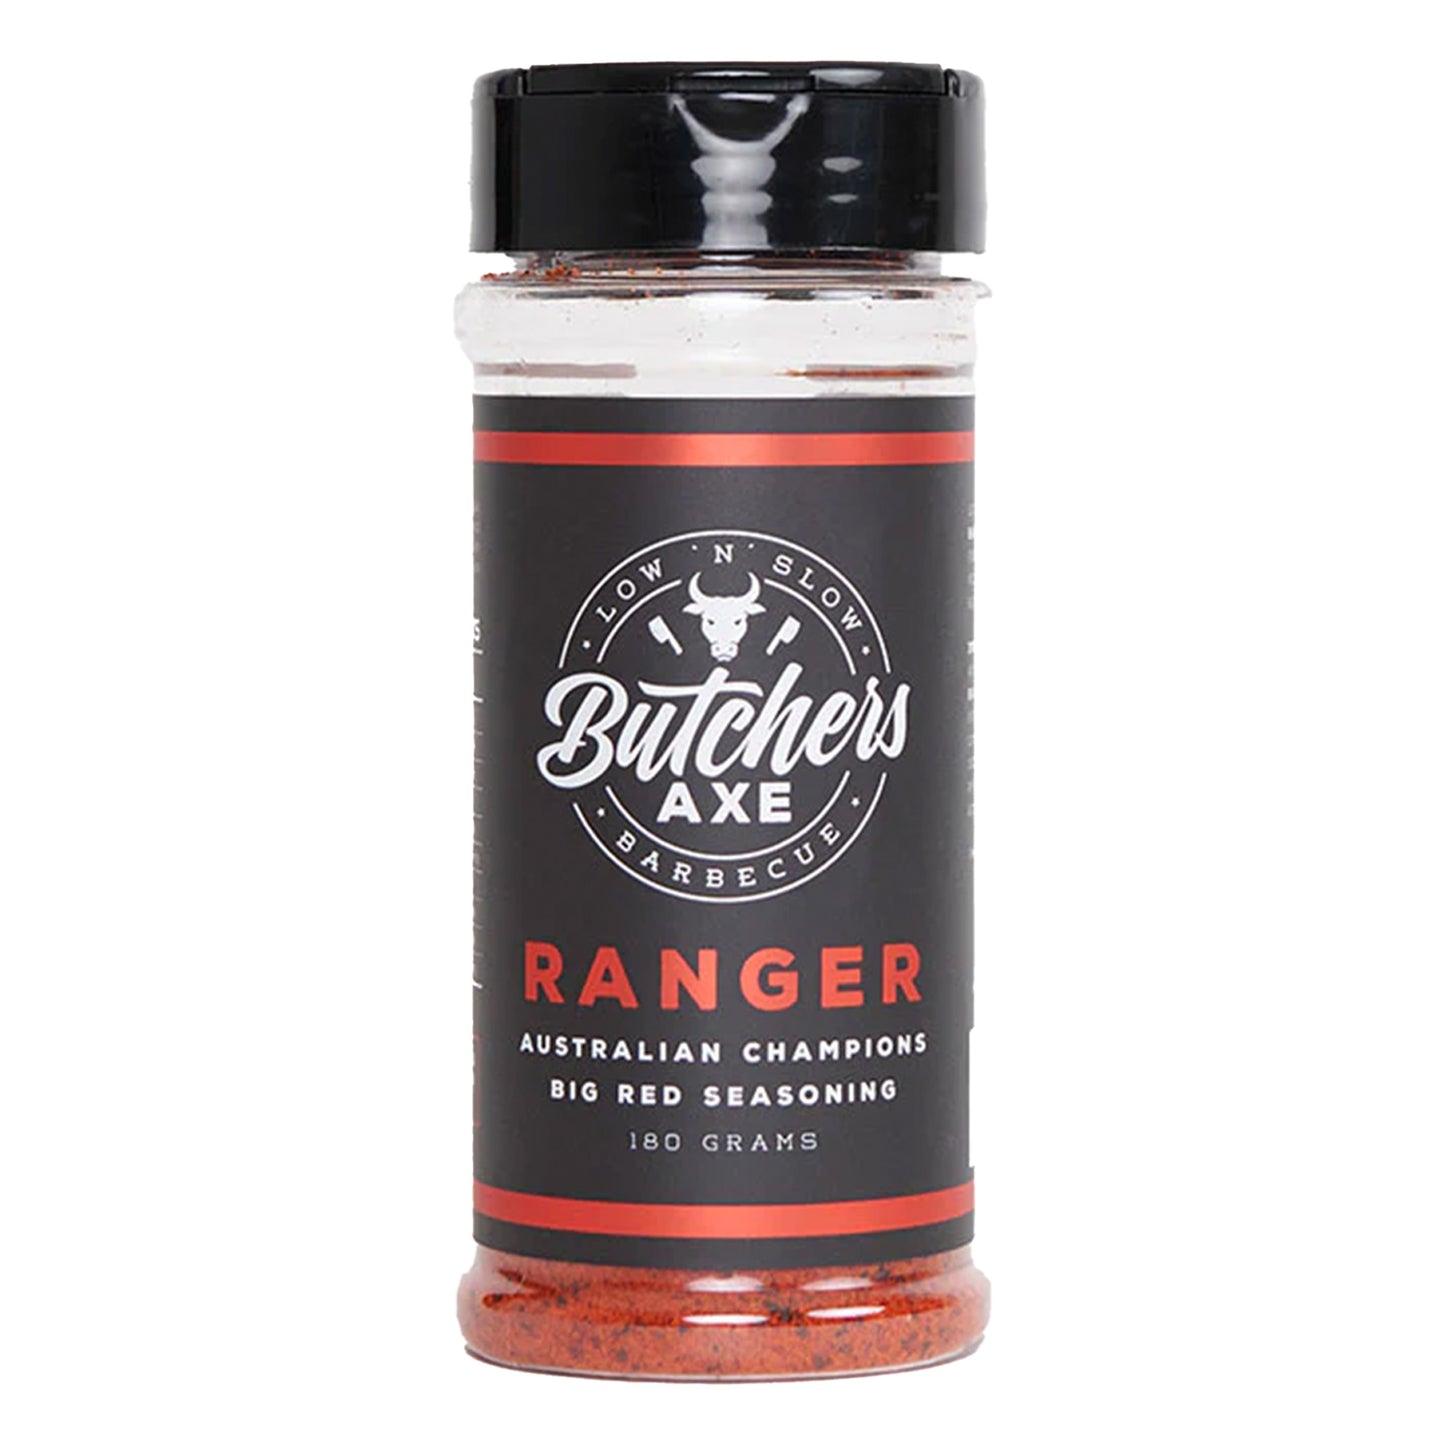 Butchers Axe “Ranger” Red Rub